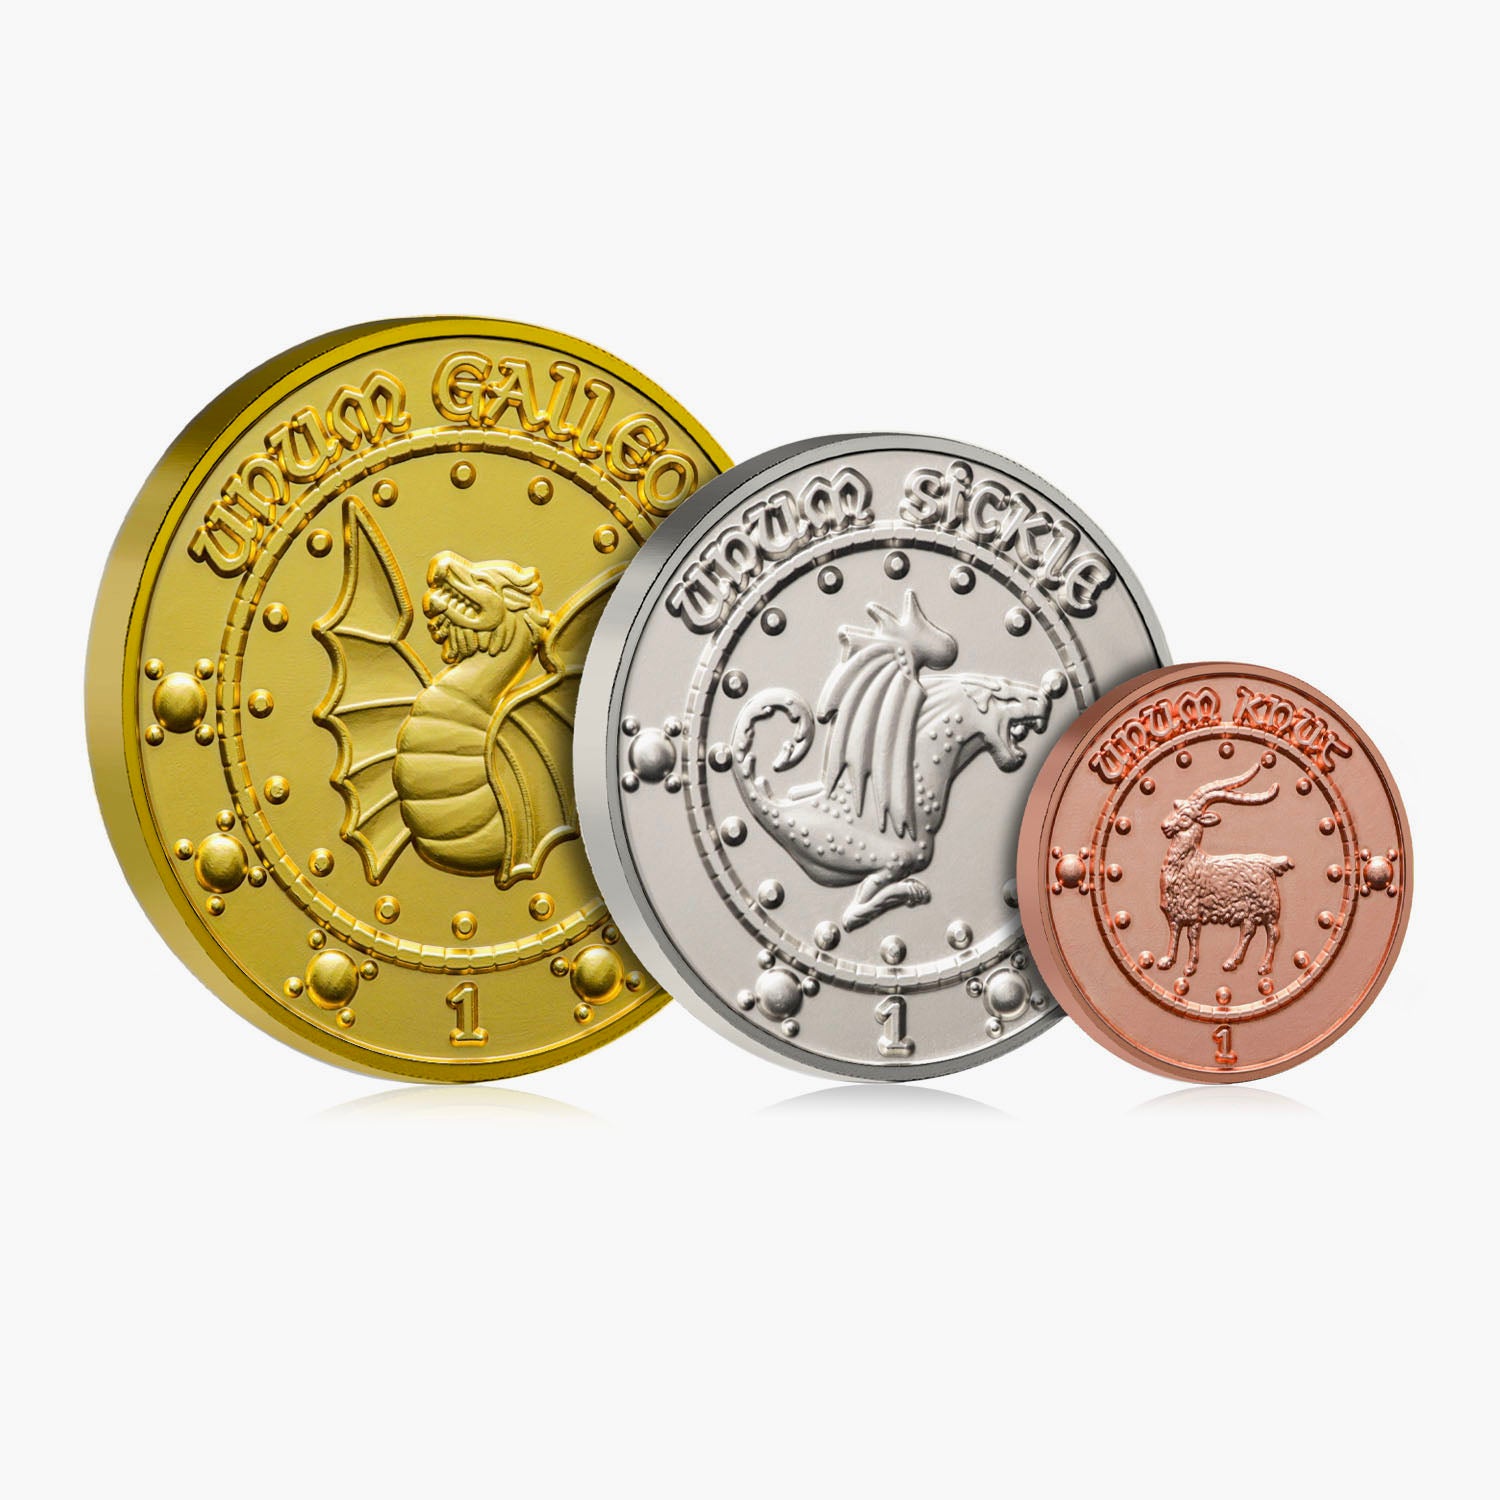 Harry Potter Gringotts Wizarding Bank Coin Set